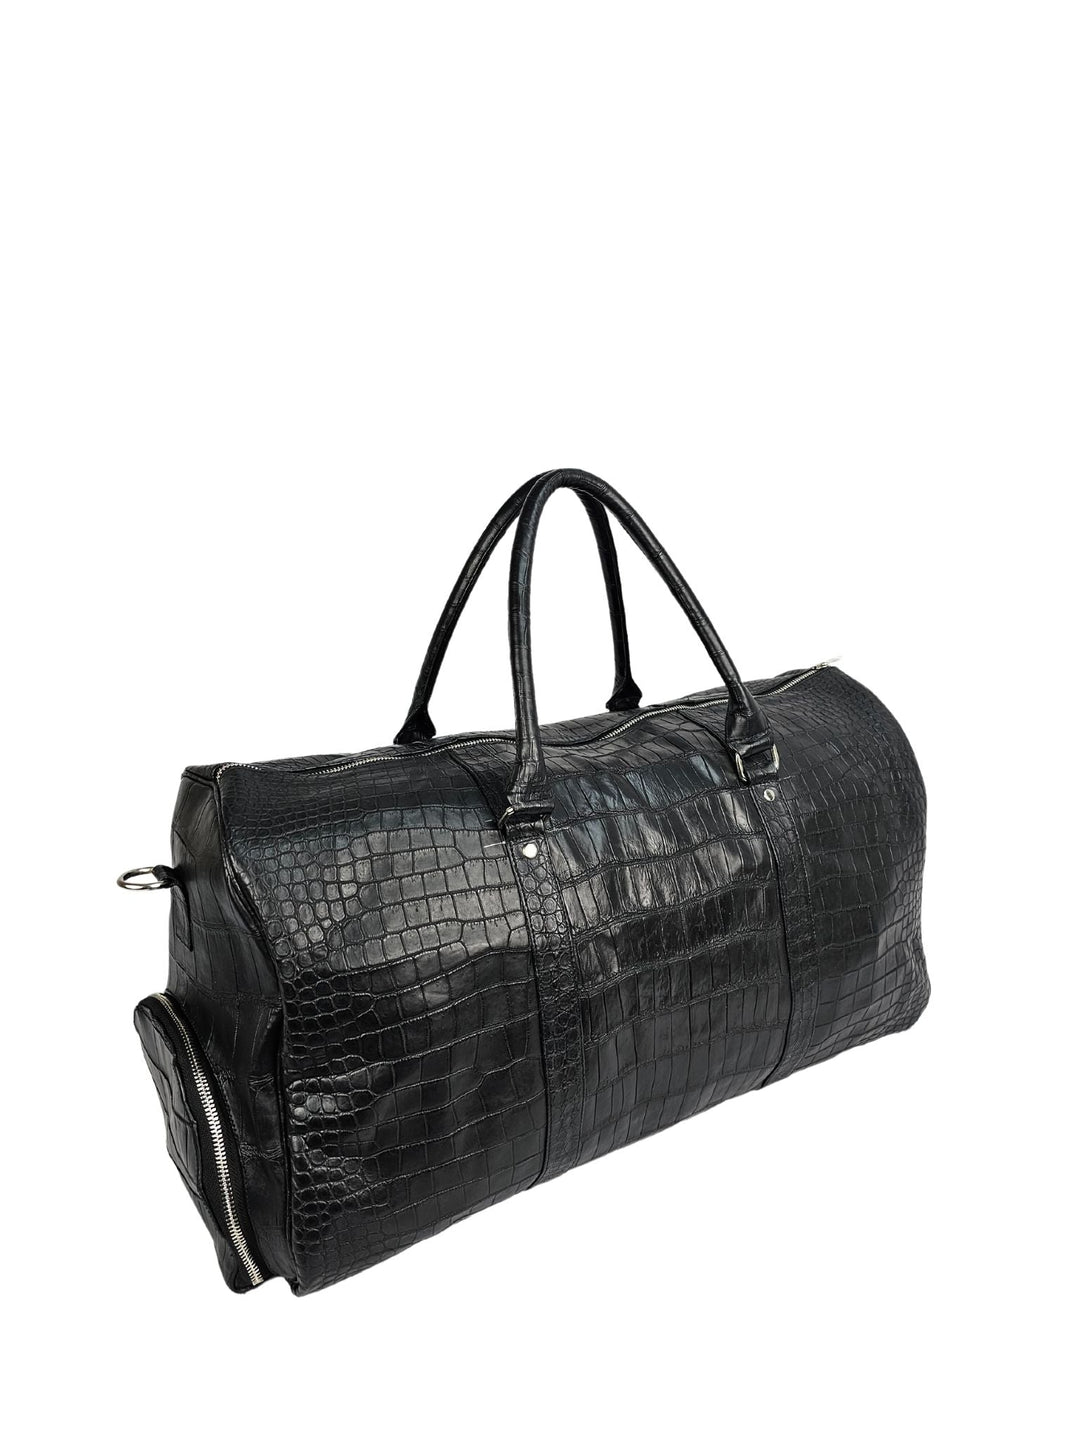 XXL Black Alligator Duffle Bag by Maison Kingsley - Maison Kingsley Couture Spain